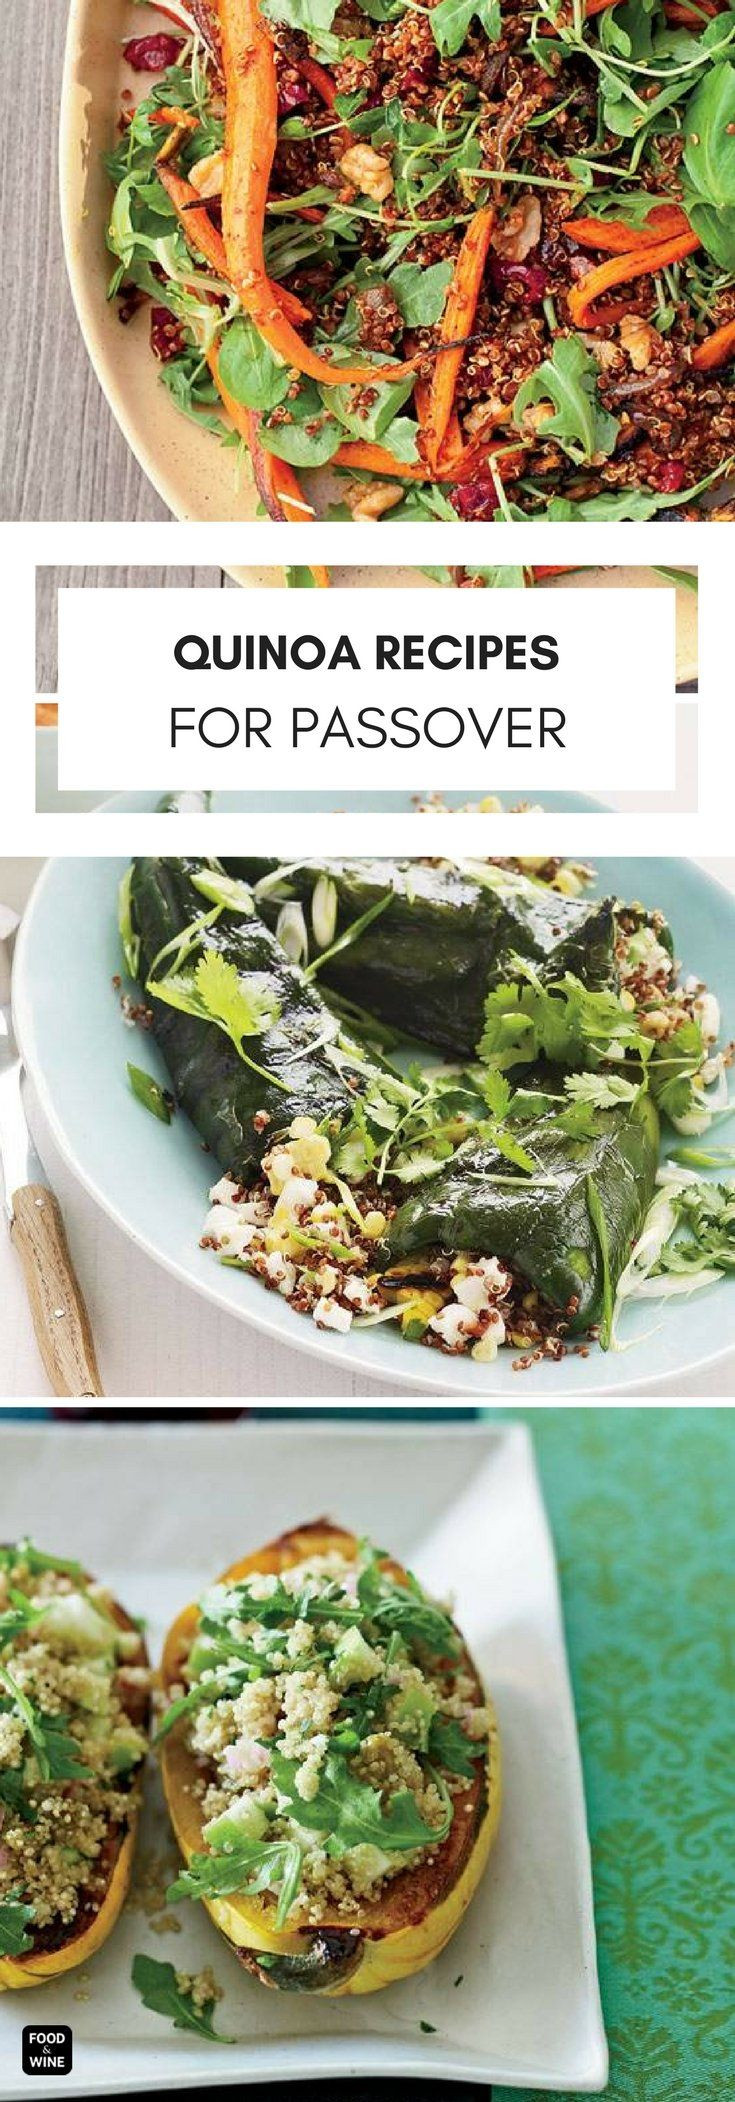 Passover Quinoa Recipes
 Quinoa Recipes for Passover